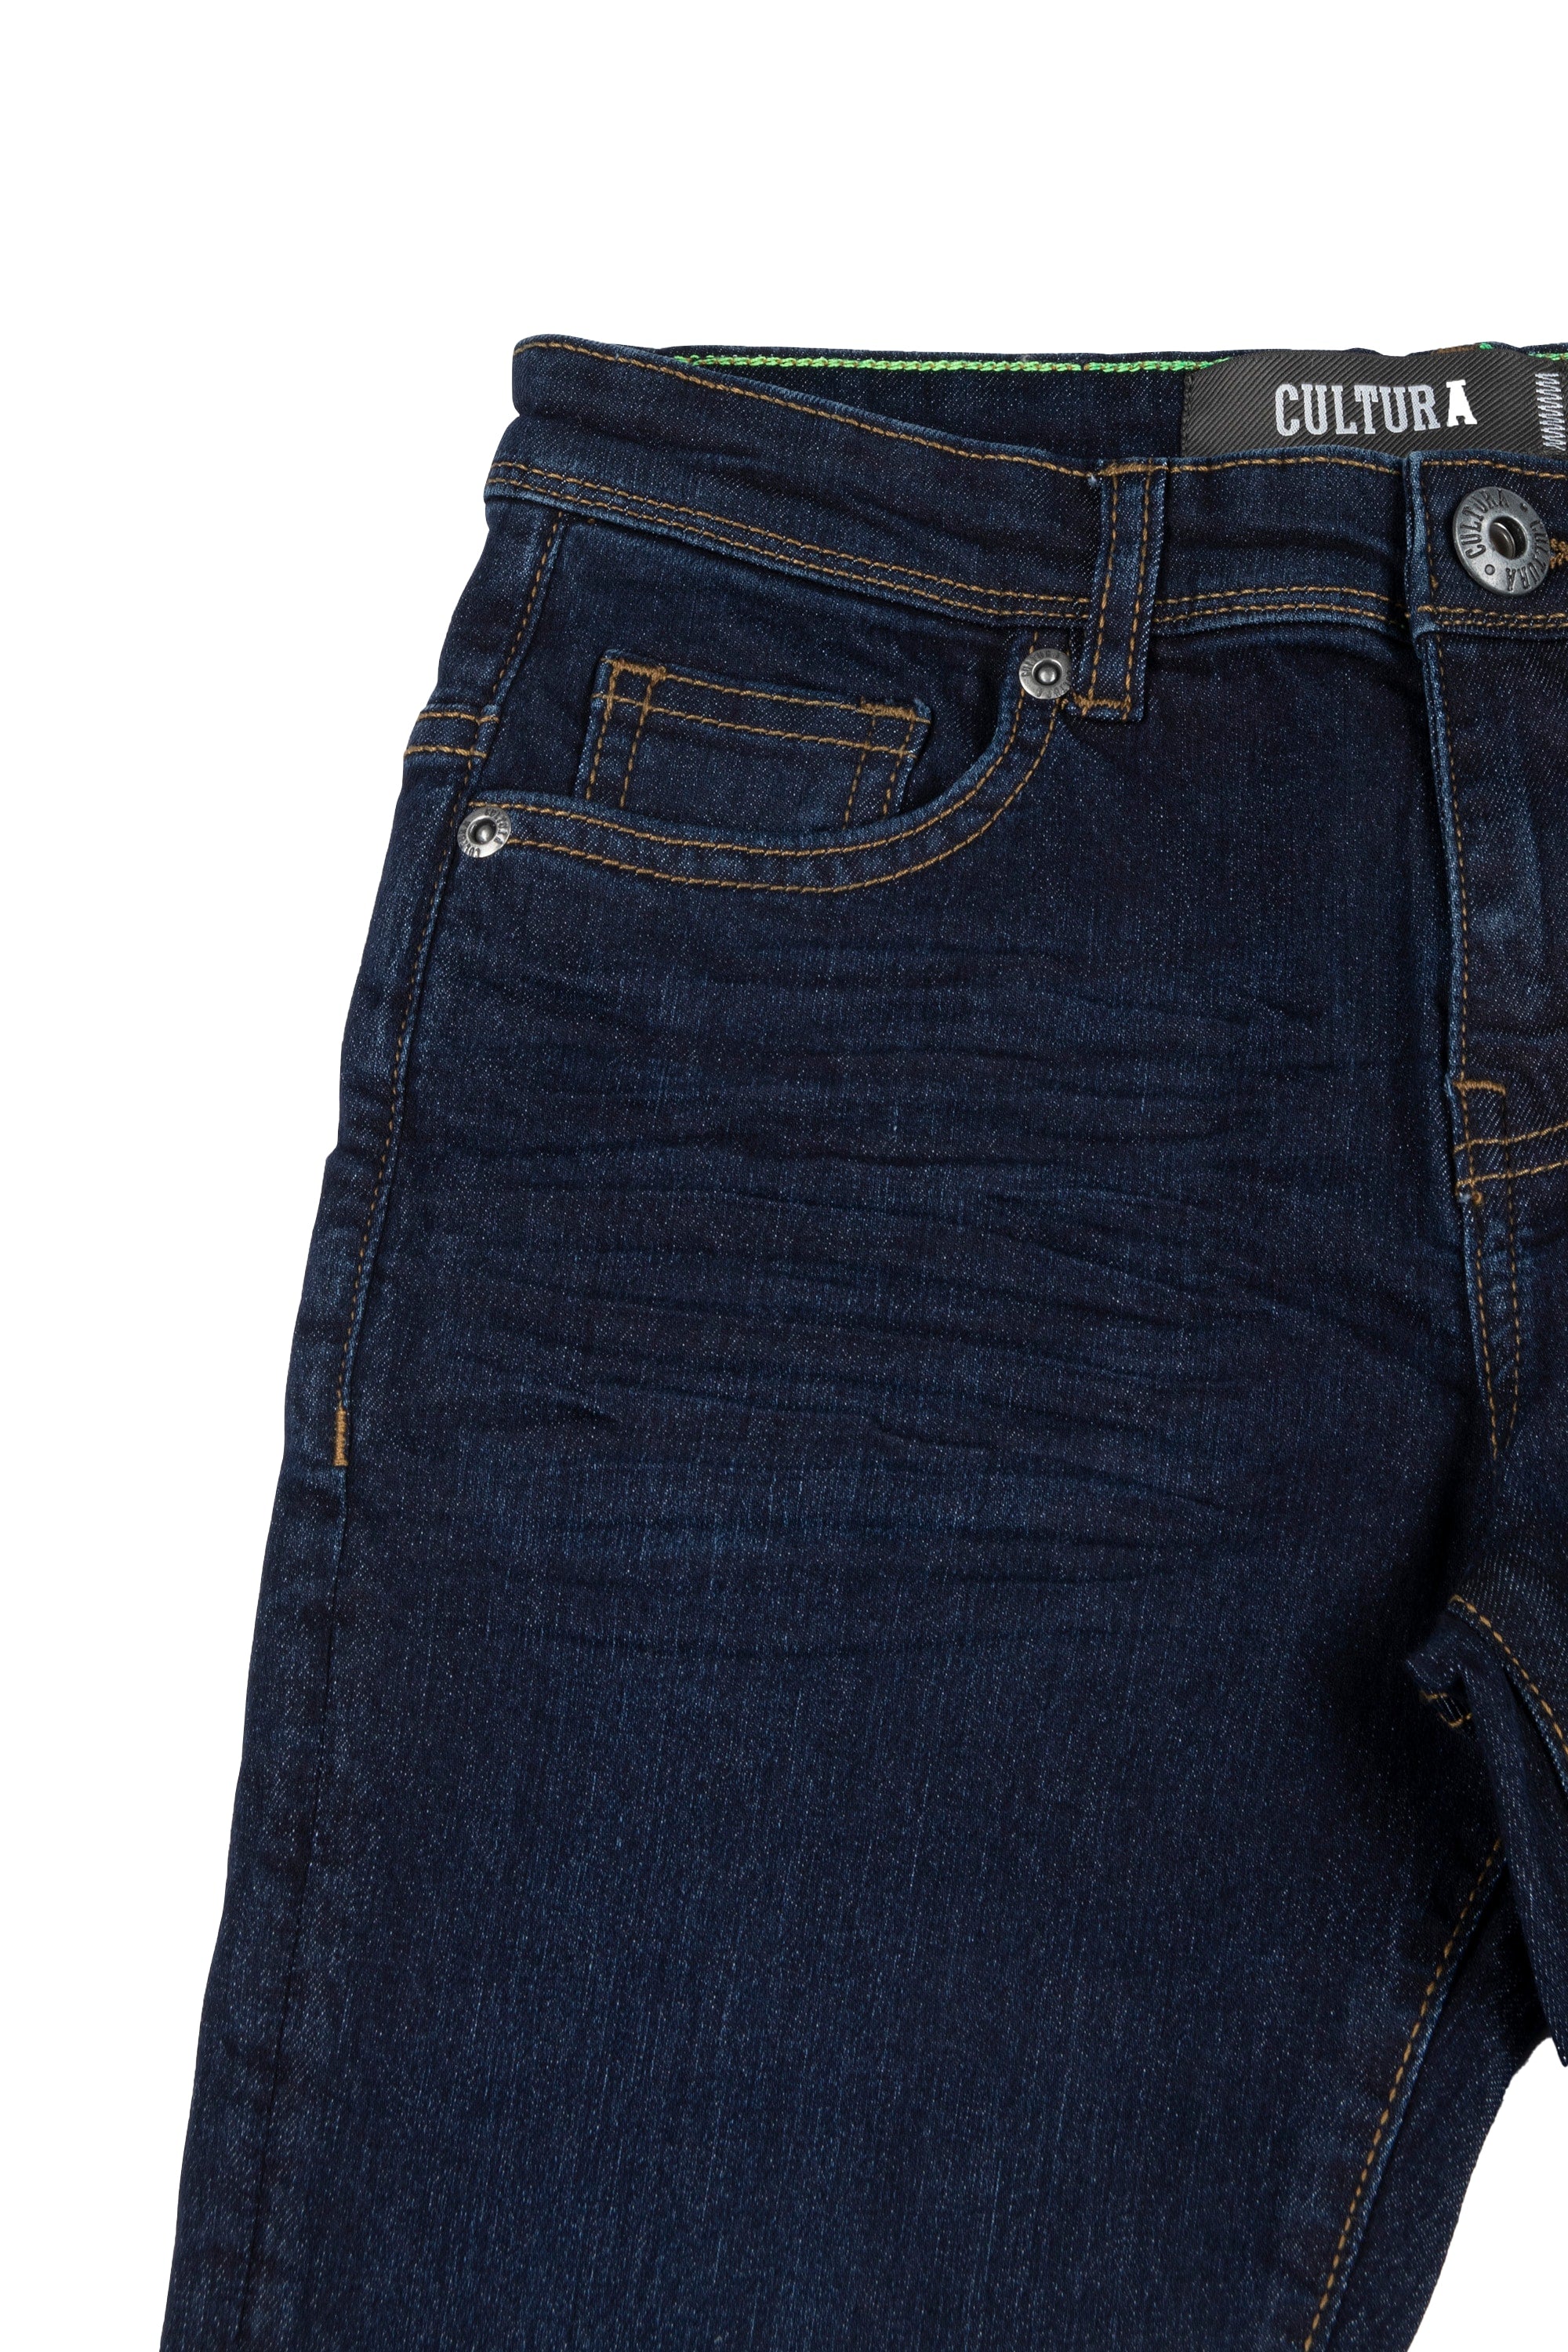 XRay Jeans Slim Cultura Boys Wash JEANS Stitch Pants – Denim X-RAY Accent